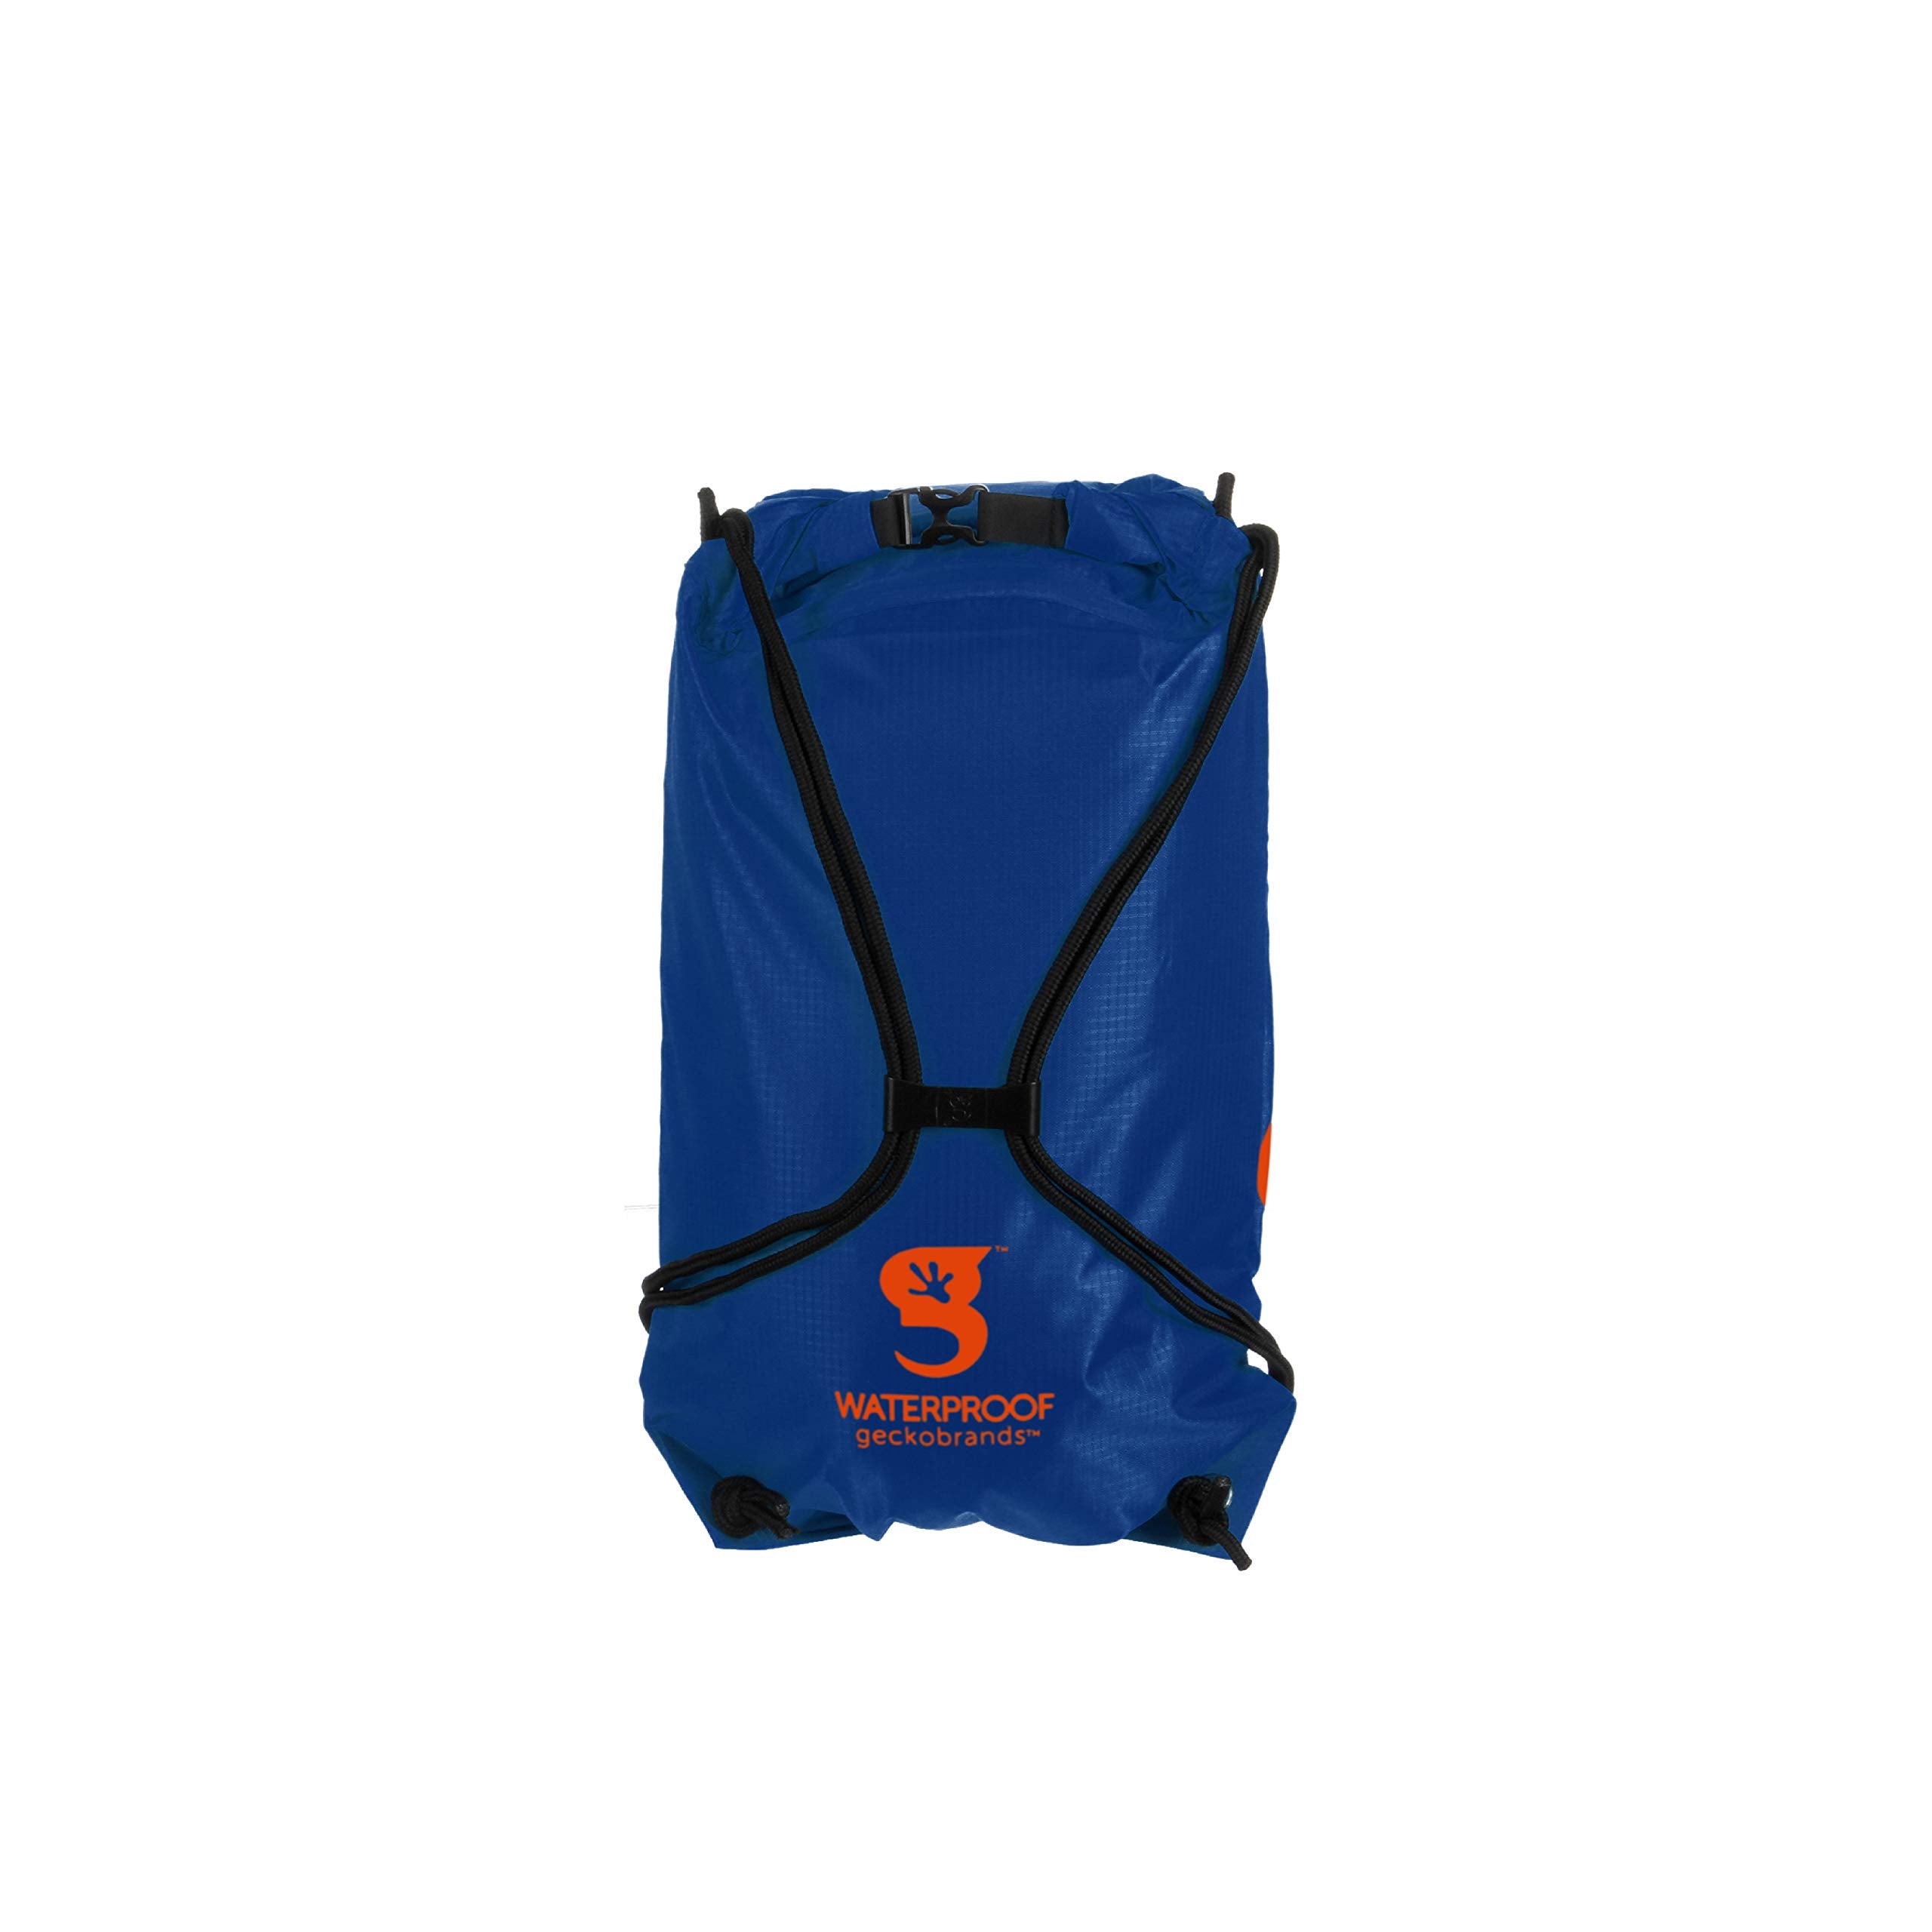 Geckobrands Waterproof Drawstring Backpack – Luggage Online